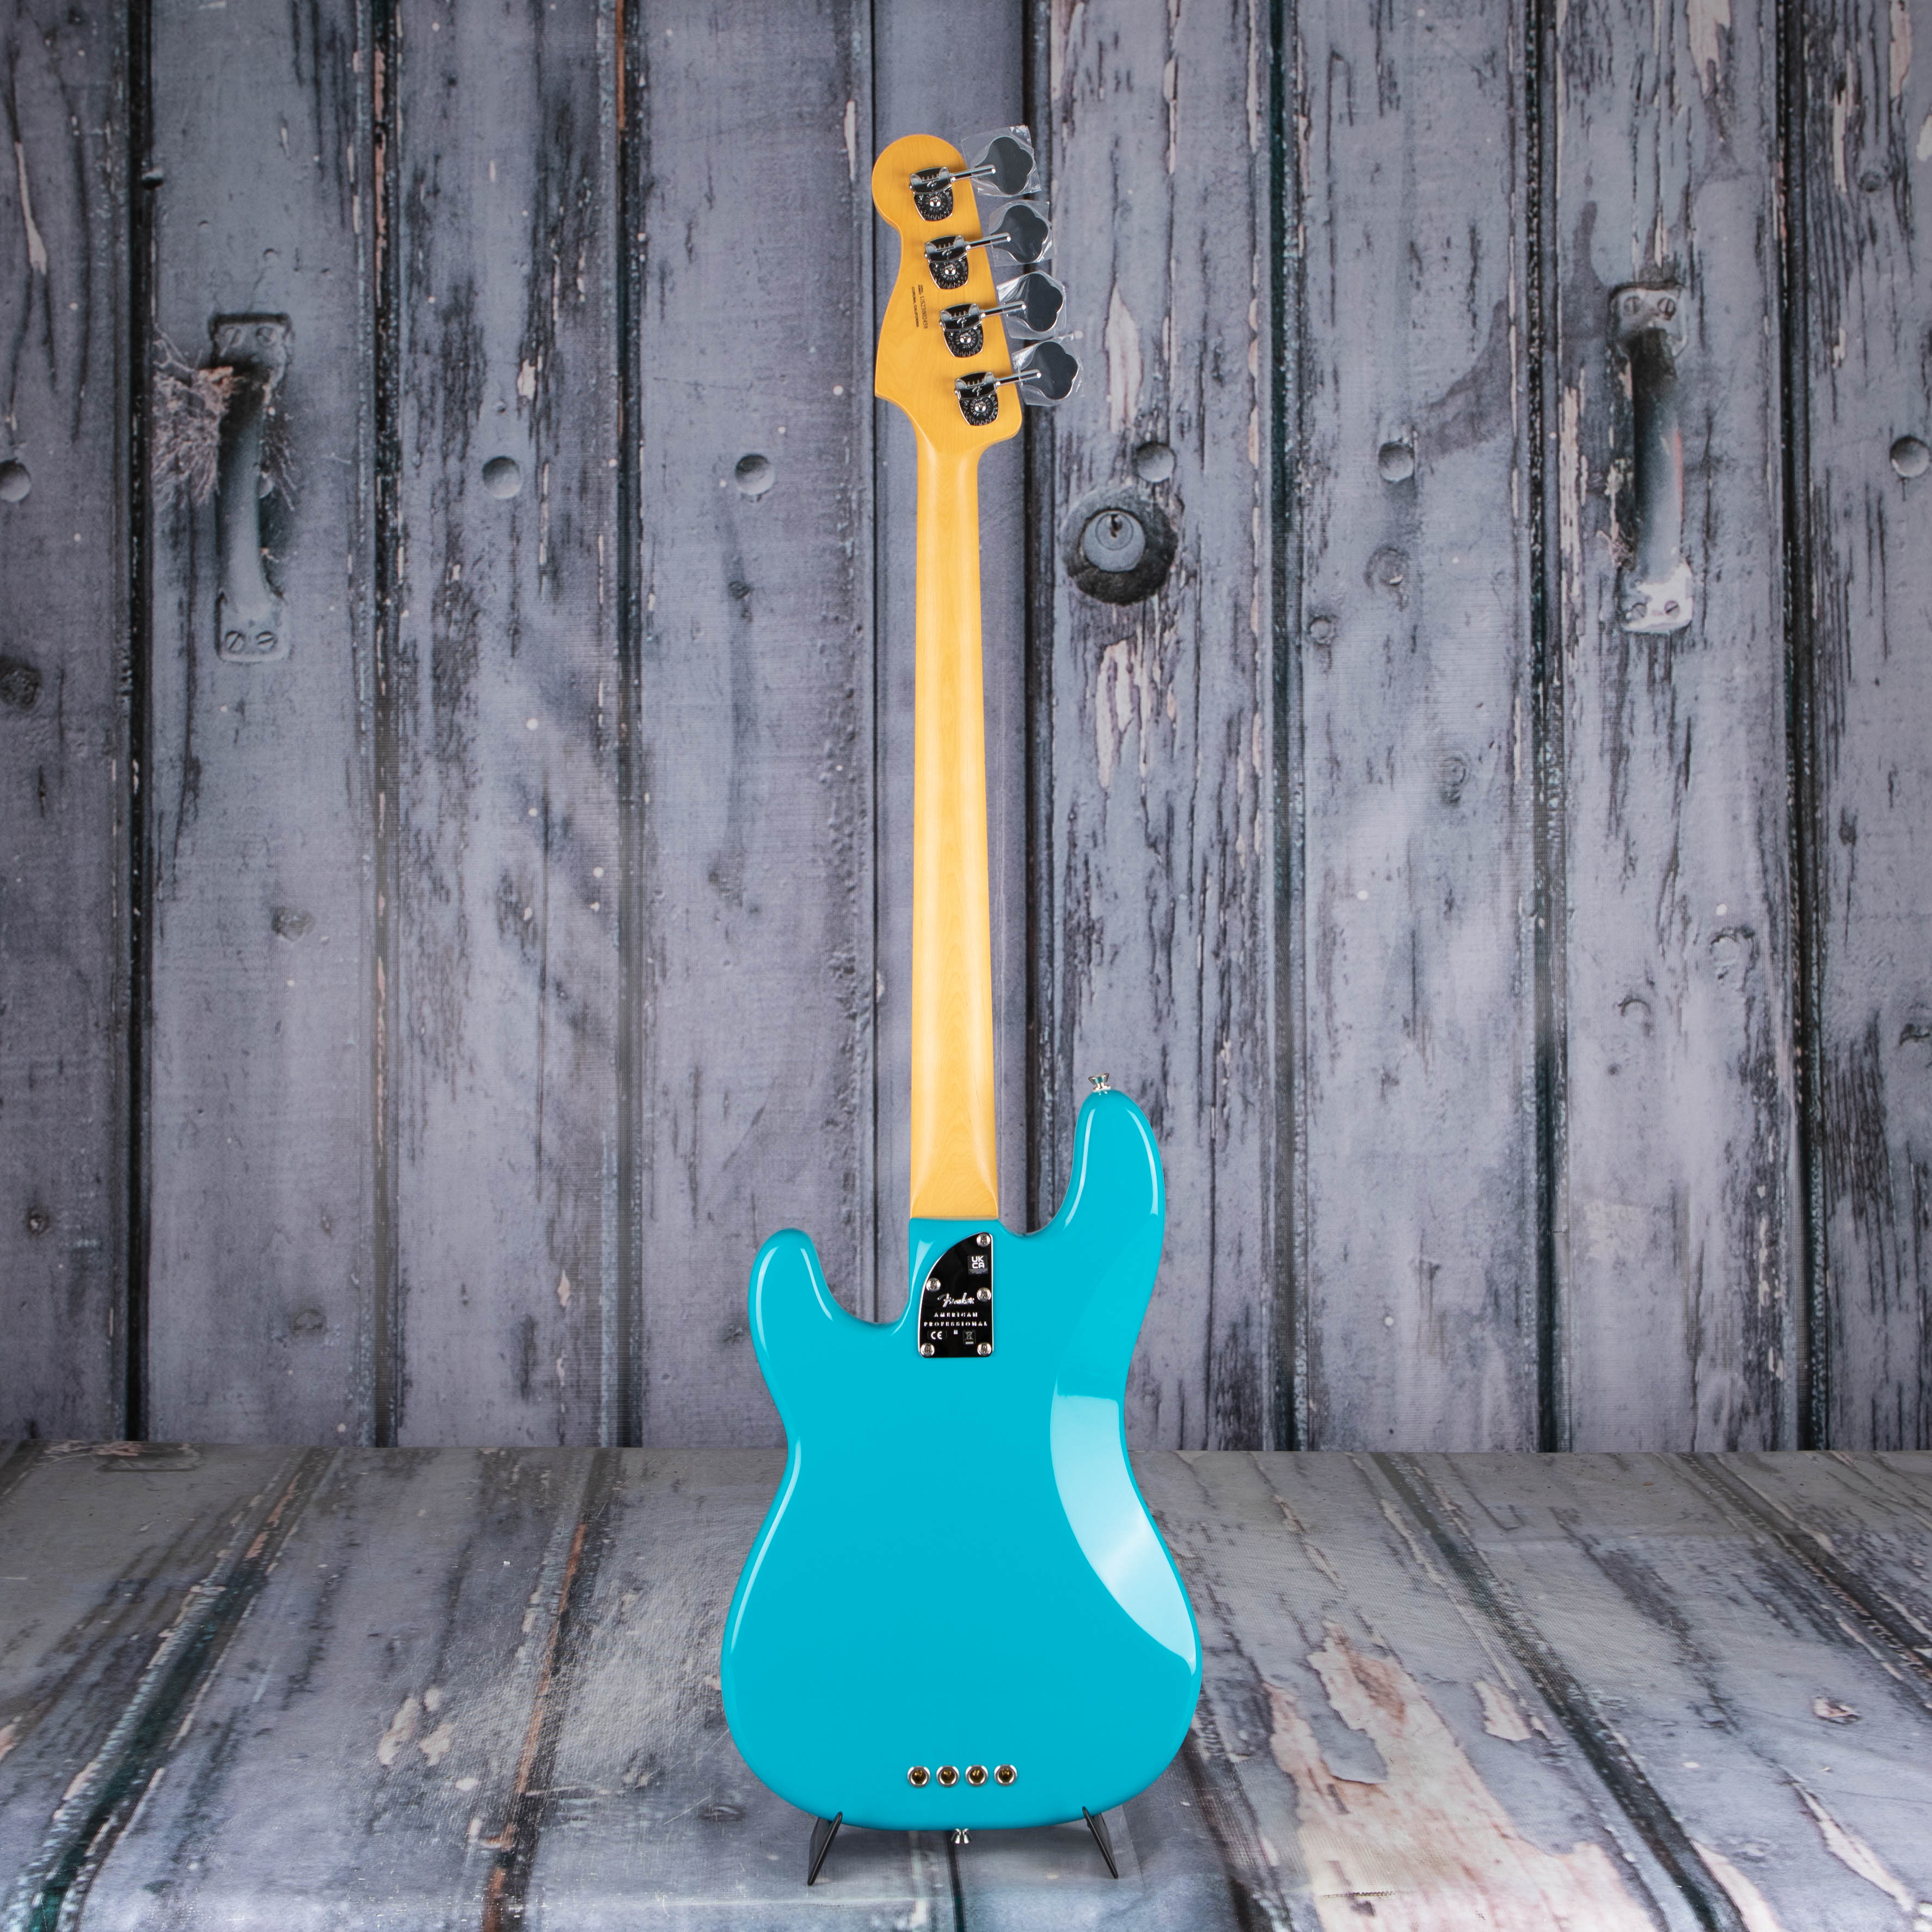 Fender American Professional II Precision Bass Guitar, Miami Blue, back